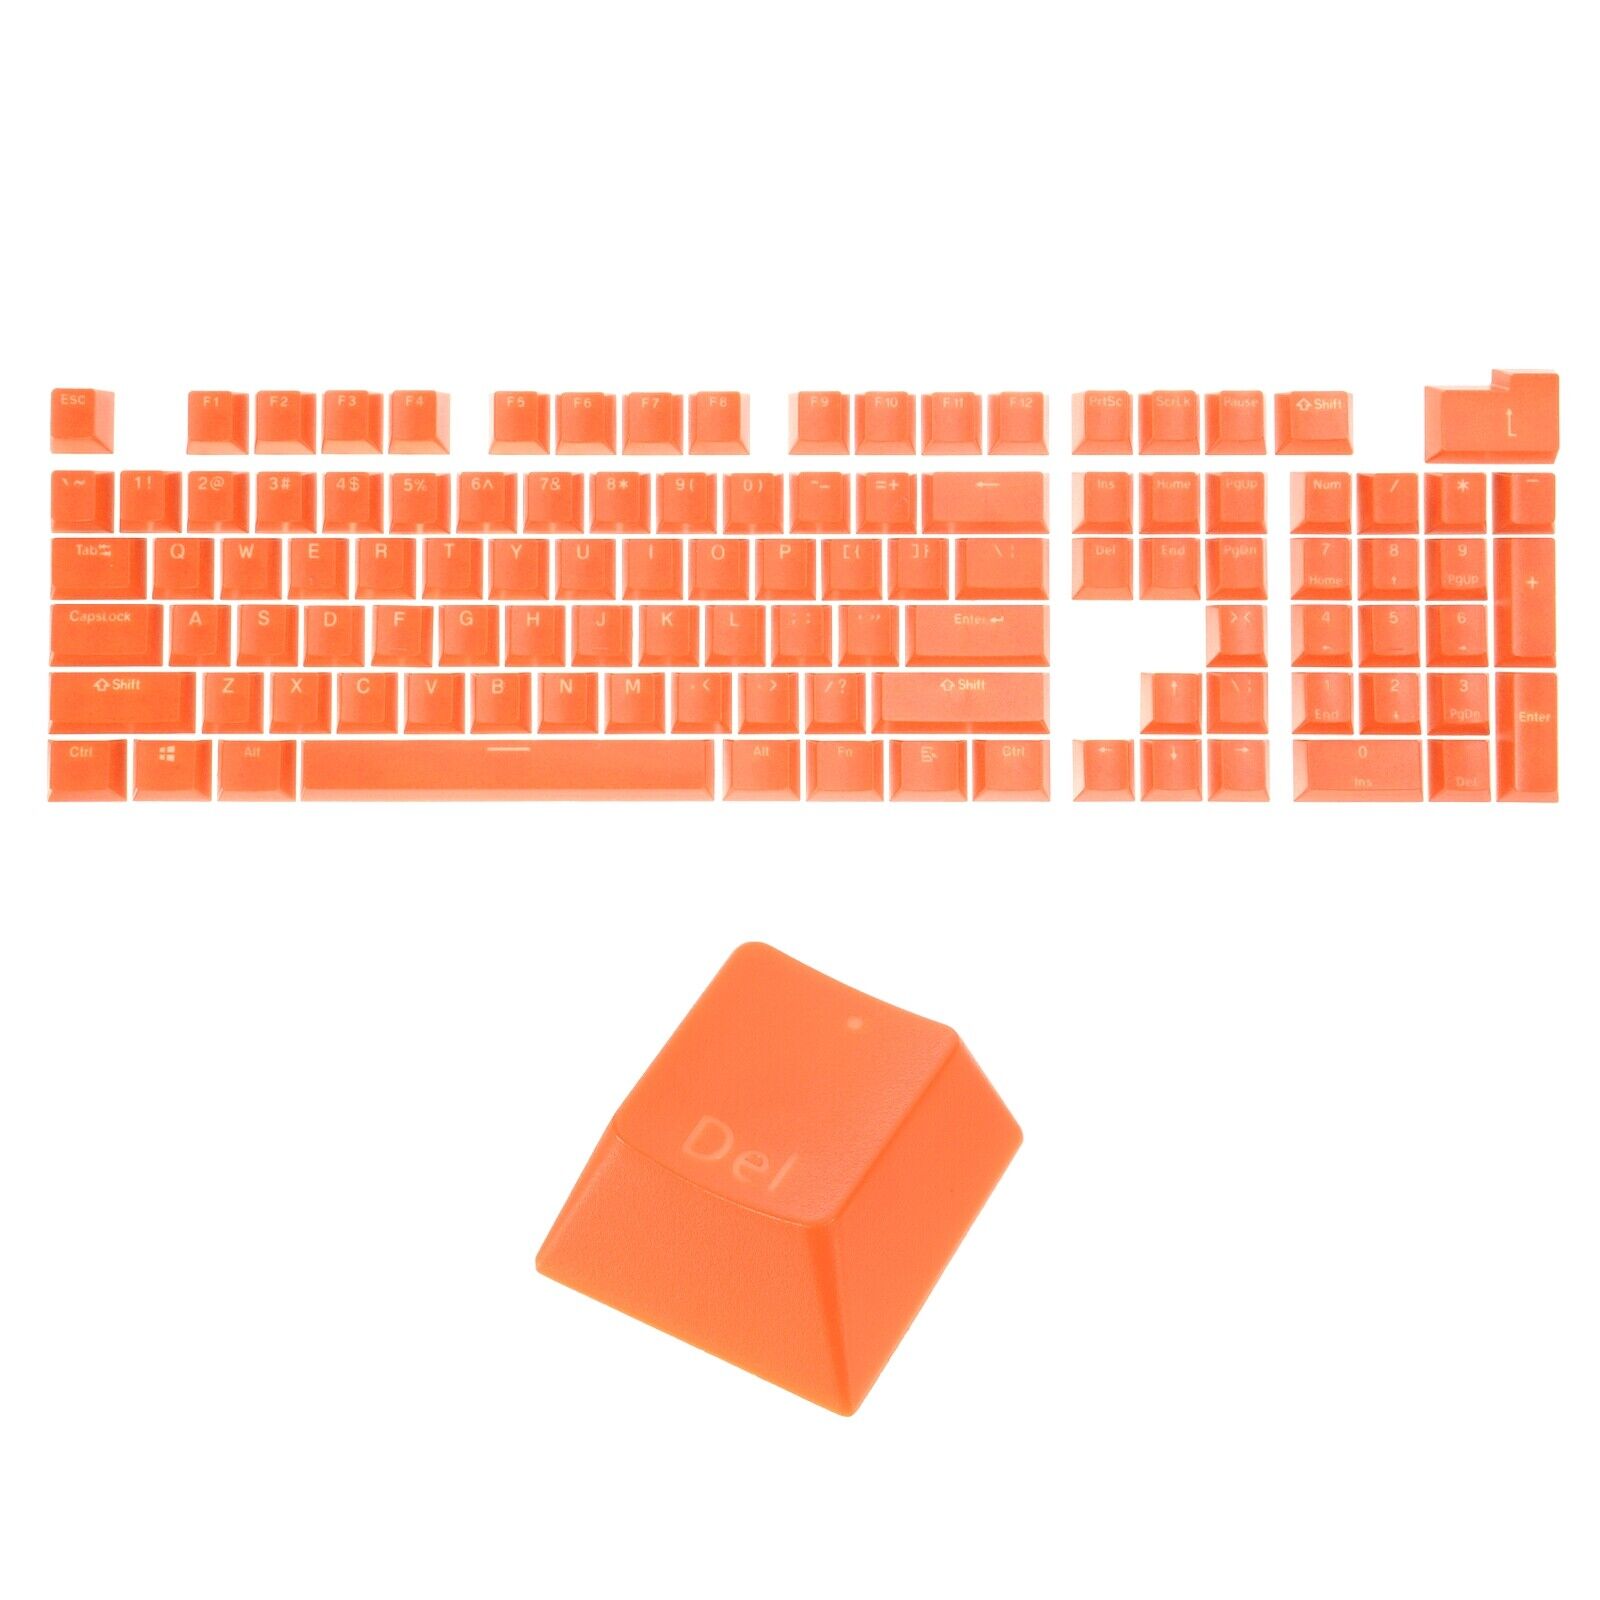 108 Keys Pudding Keycaps Set ABS for Mechanical Keyboard Layout, Orange